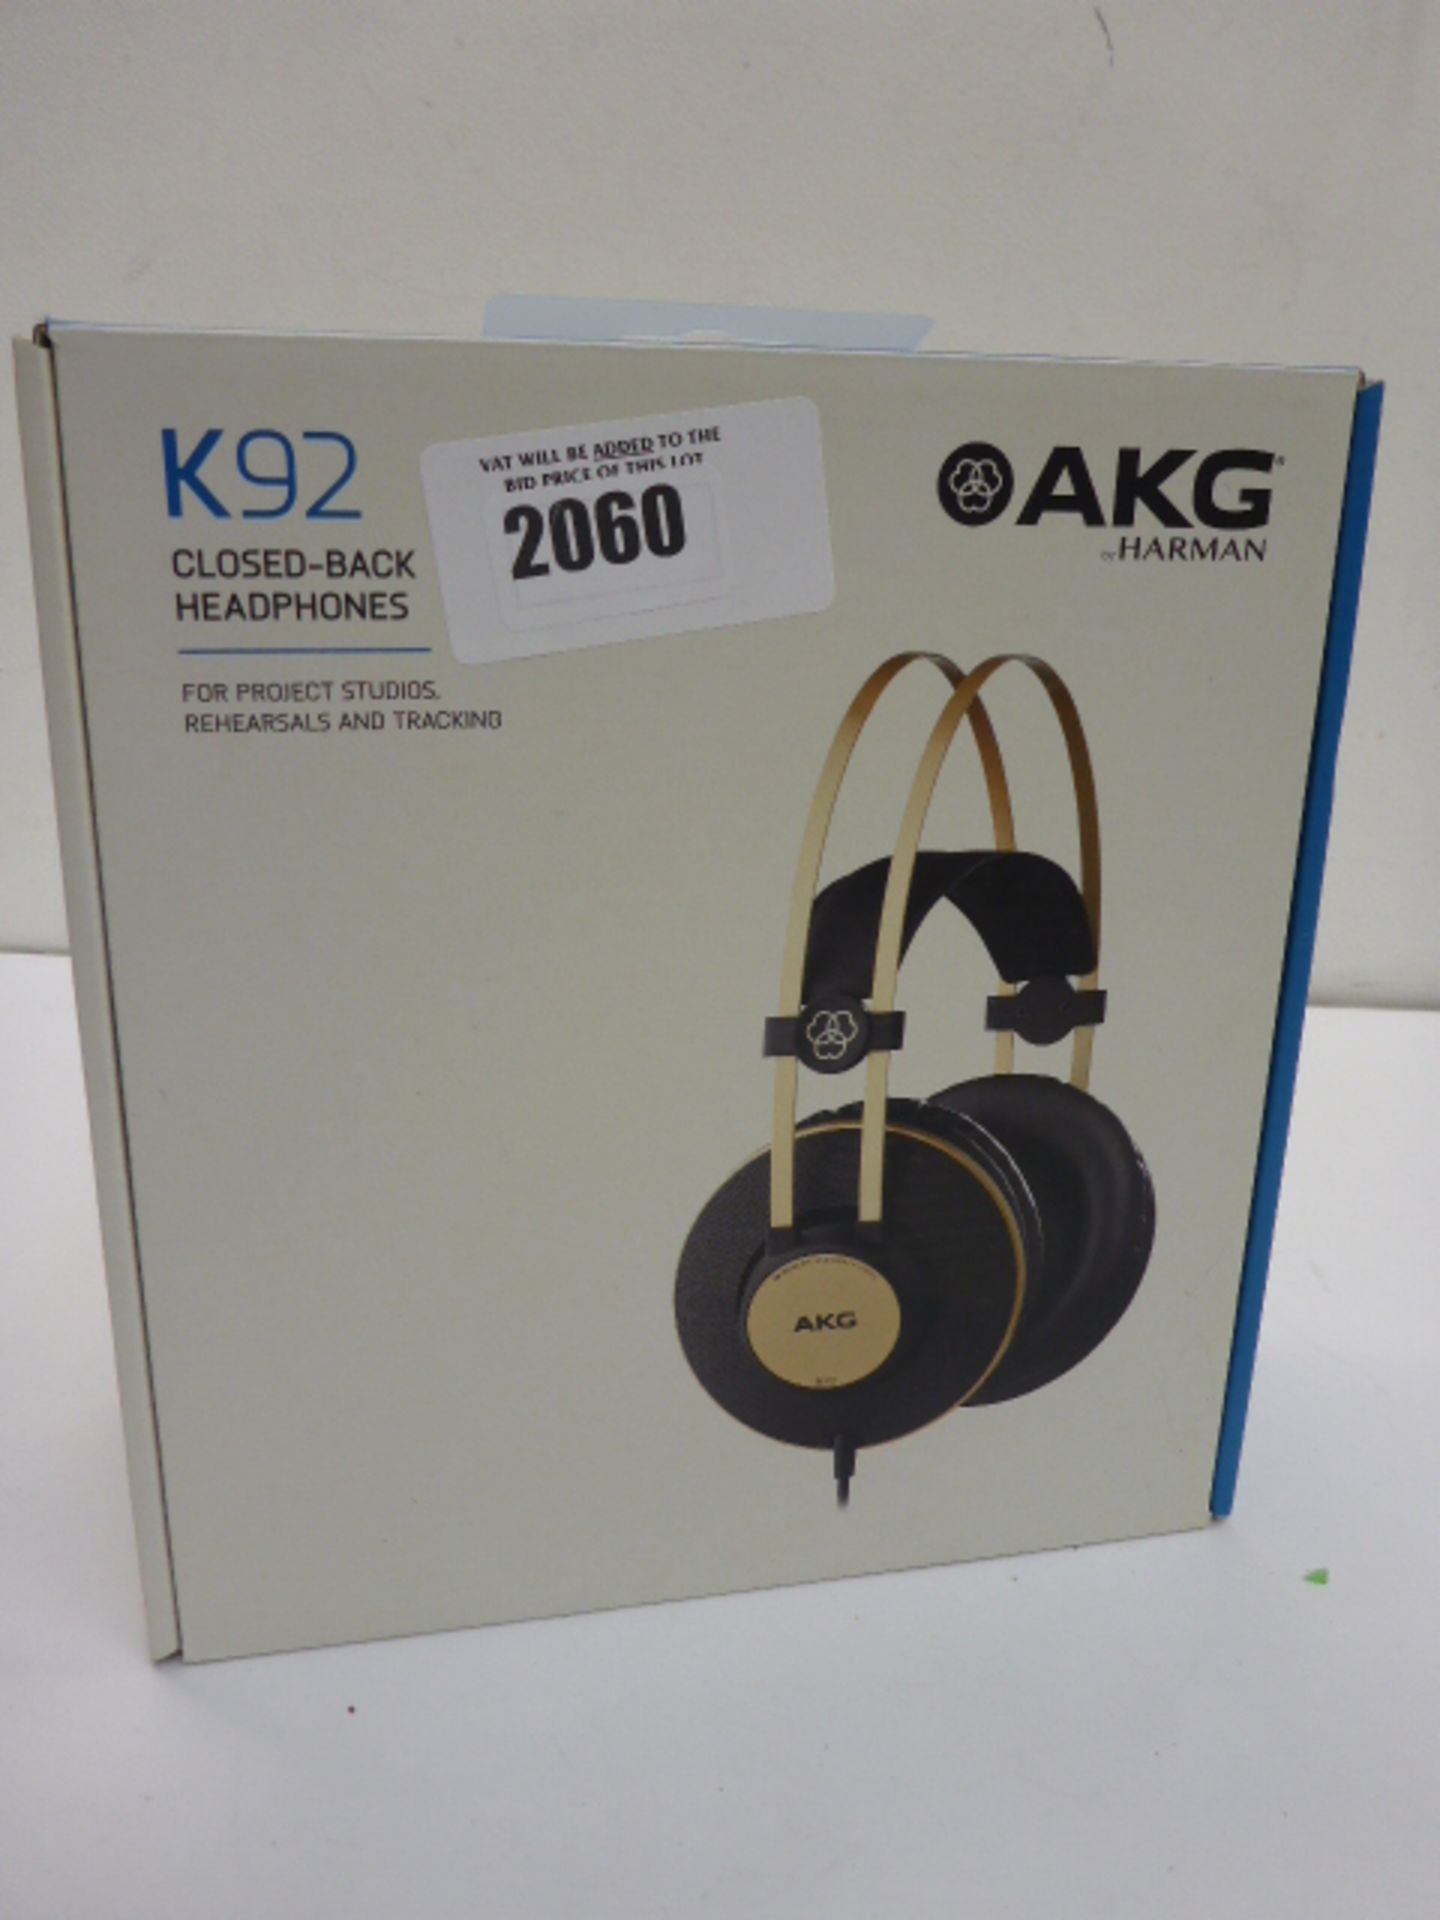 AKG Harman K92 headphones